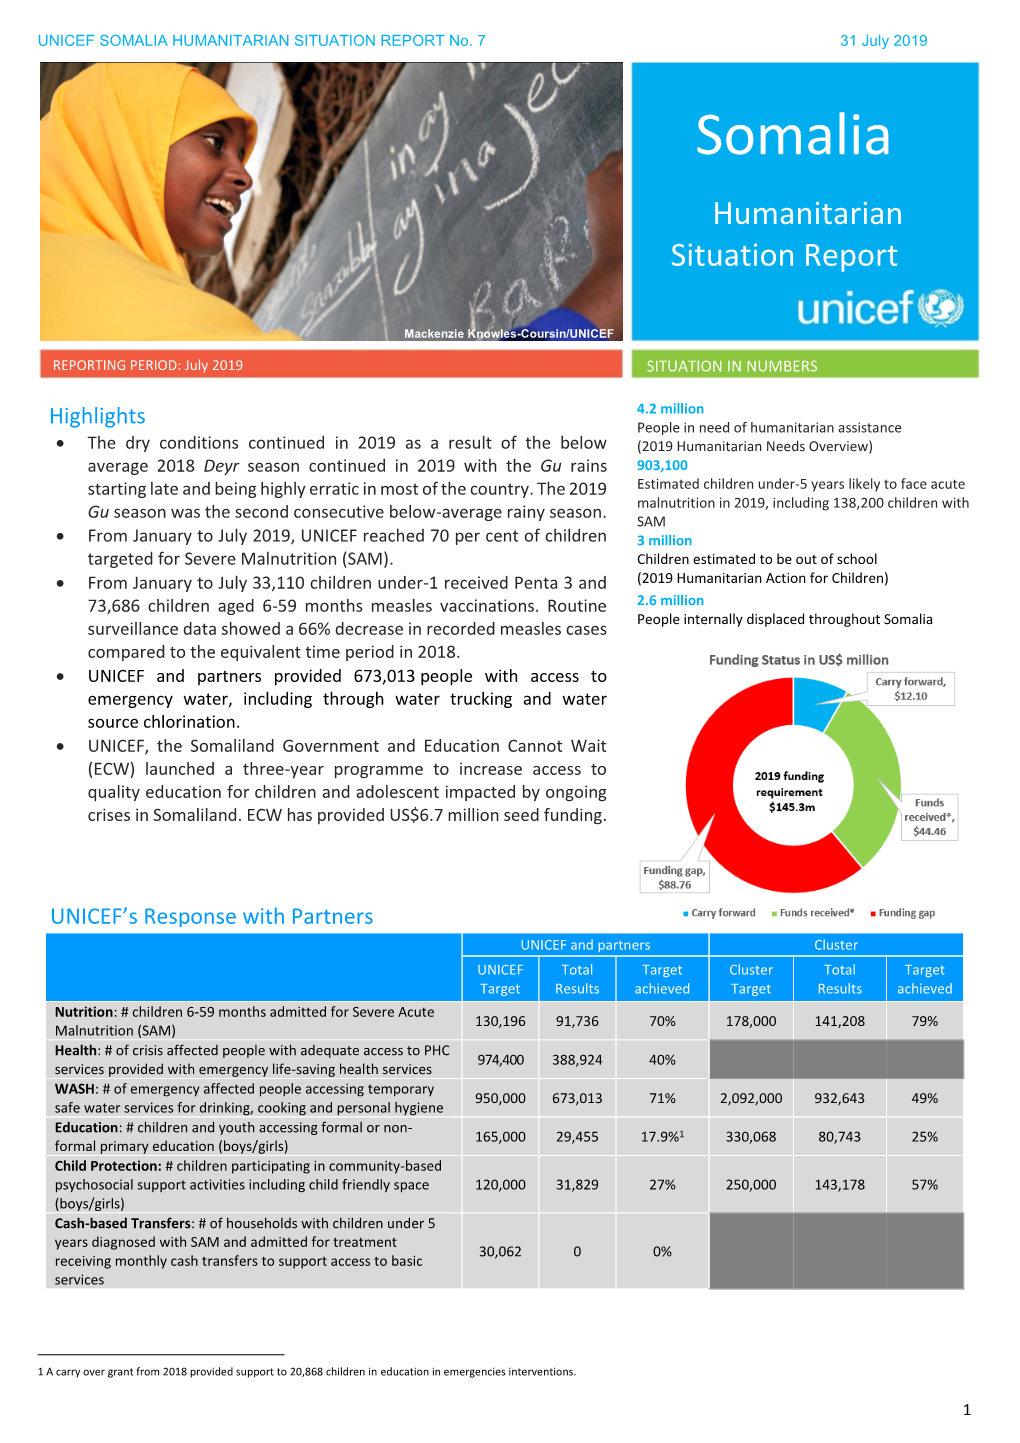 UNICEF Somalia Humanitarian Situation Mid Year